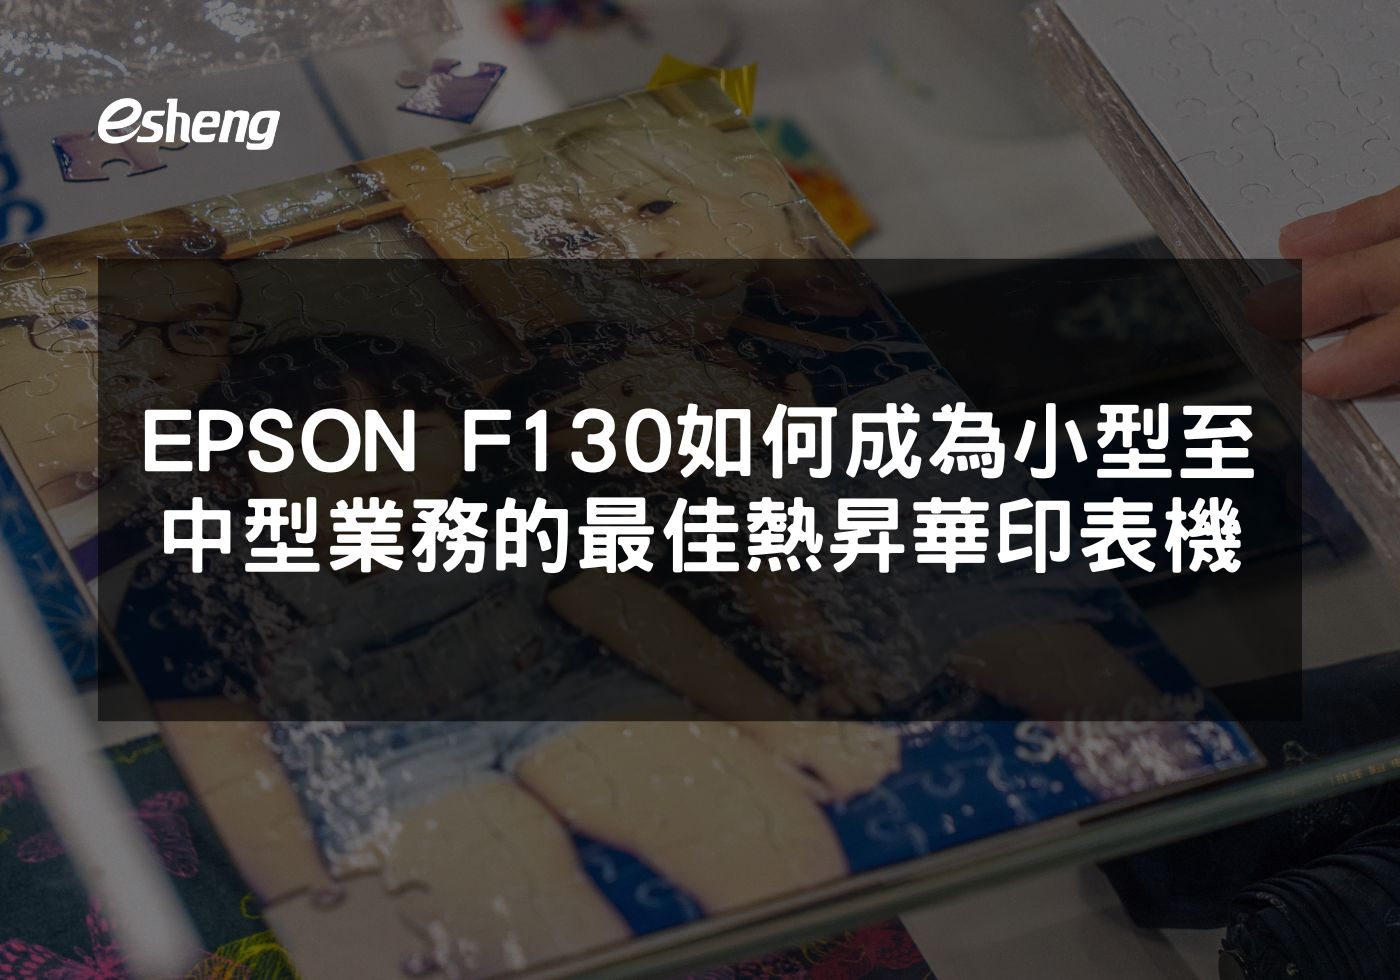 EPSON F130 熱昇華印表機的高效能與多功能性